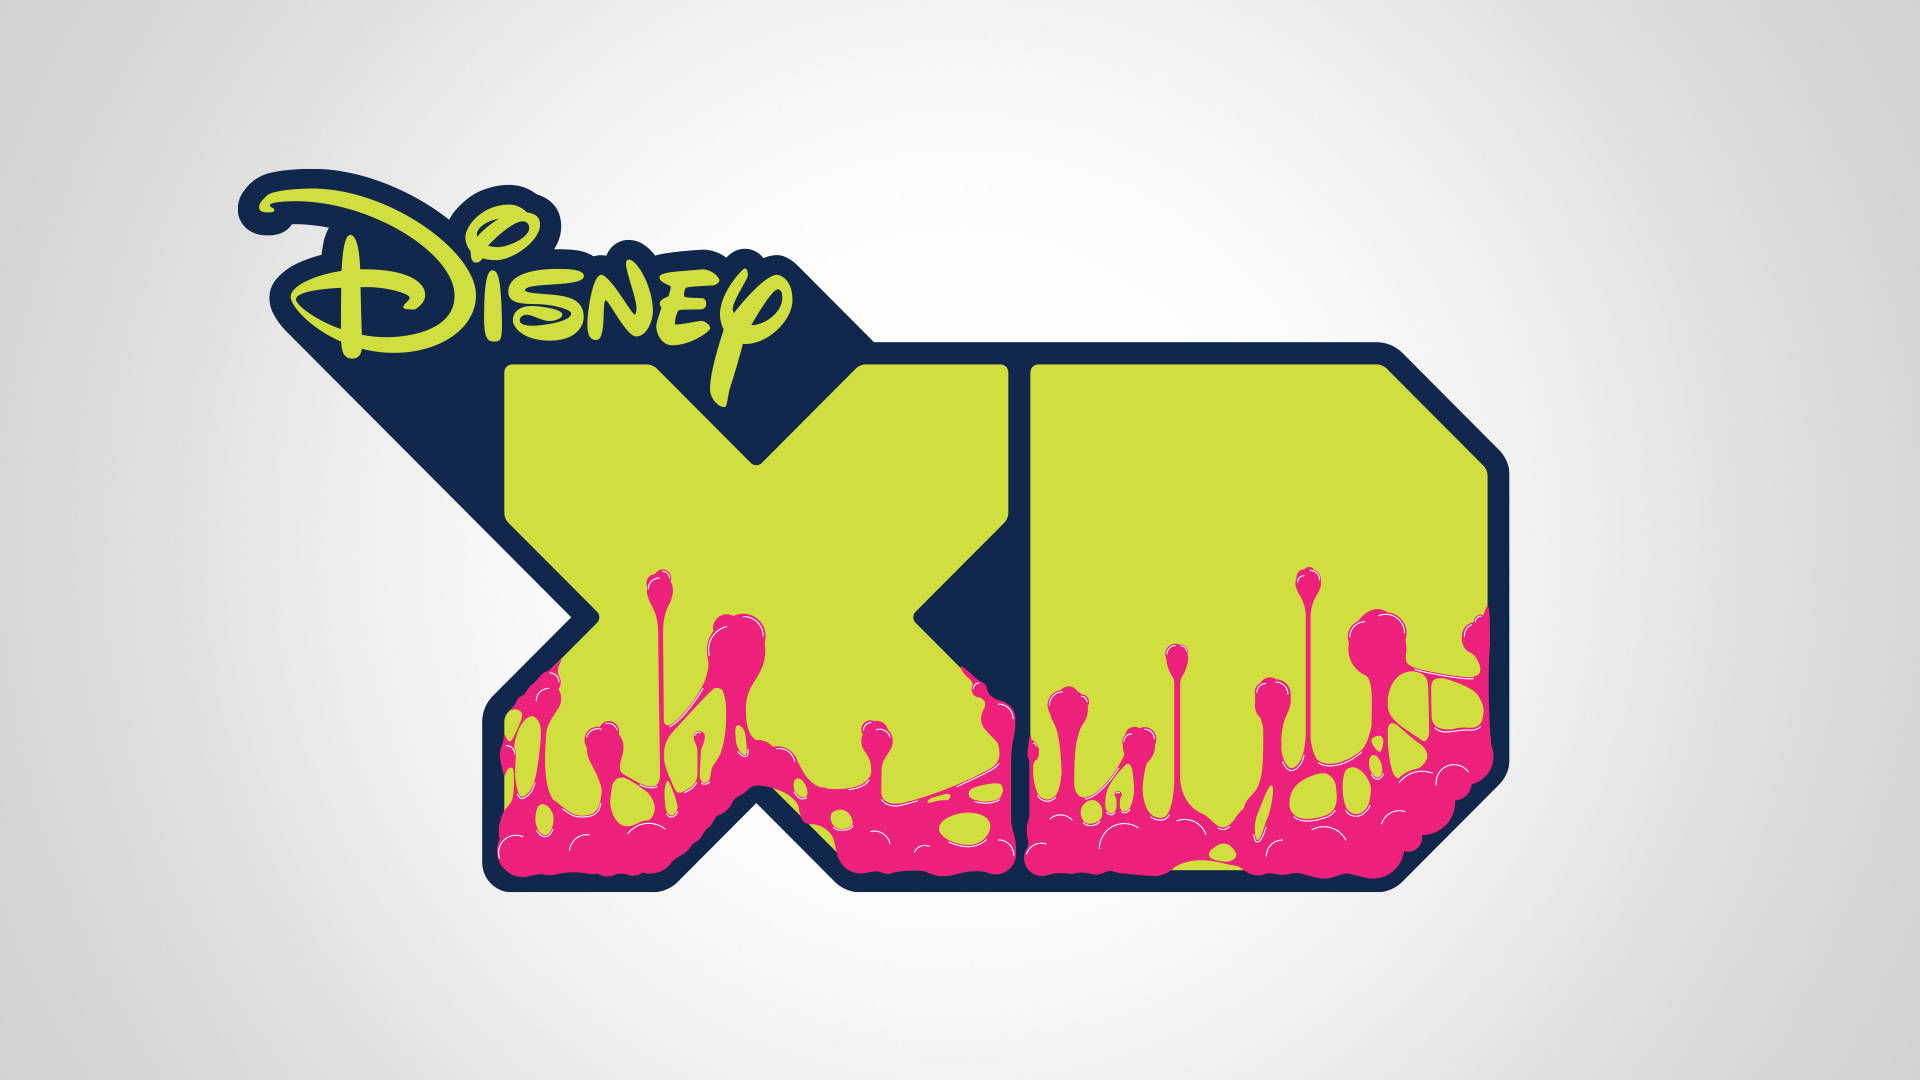 Disney Xd Modern Logo Background